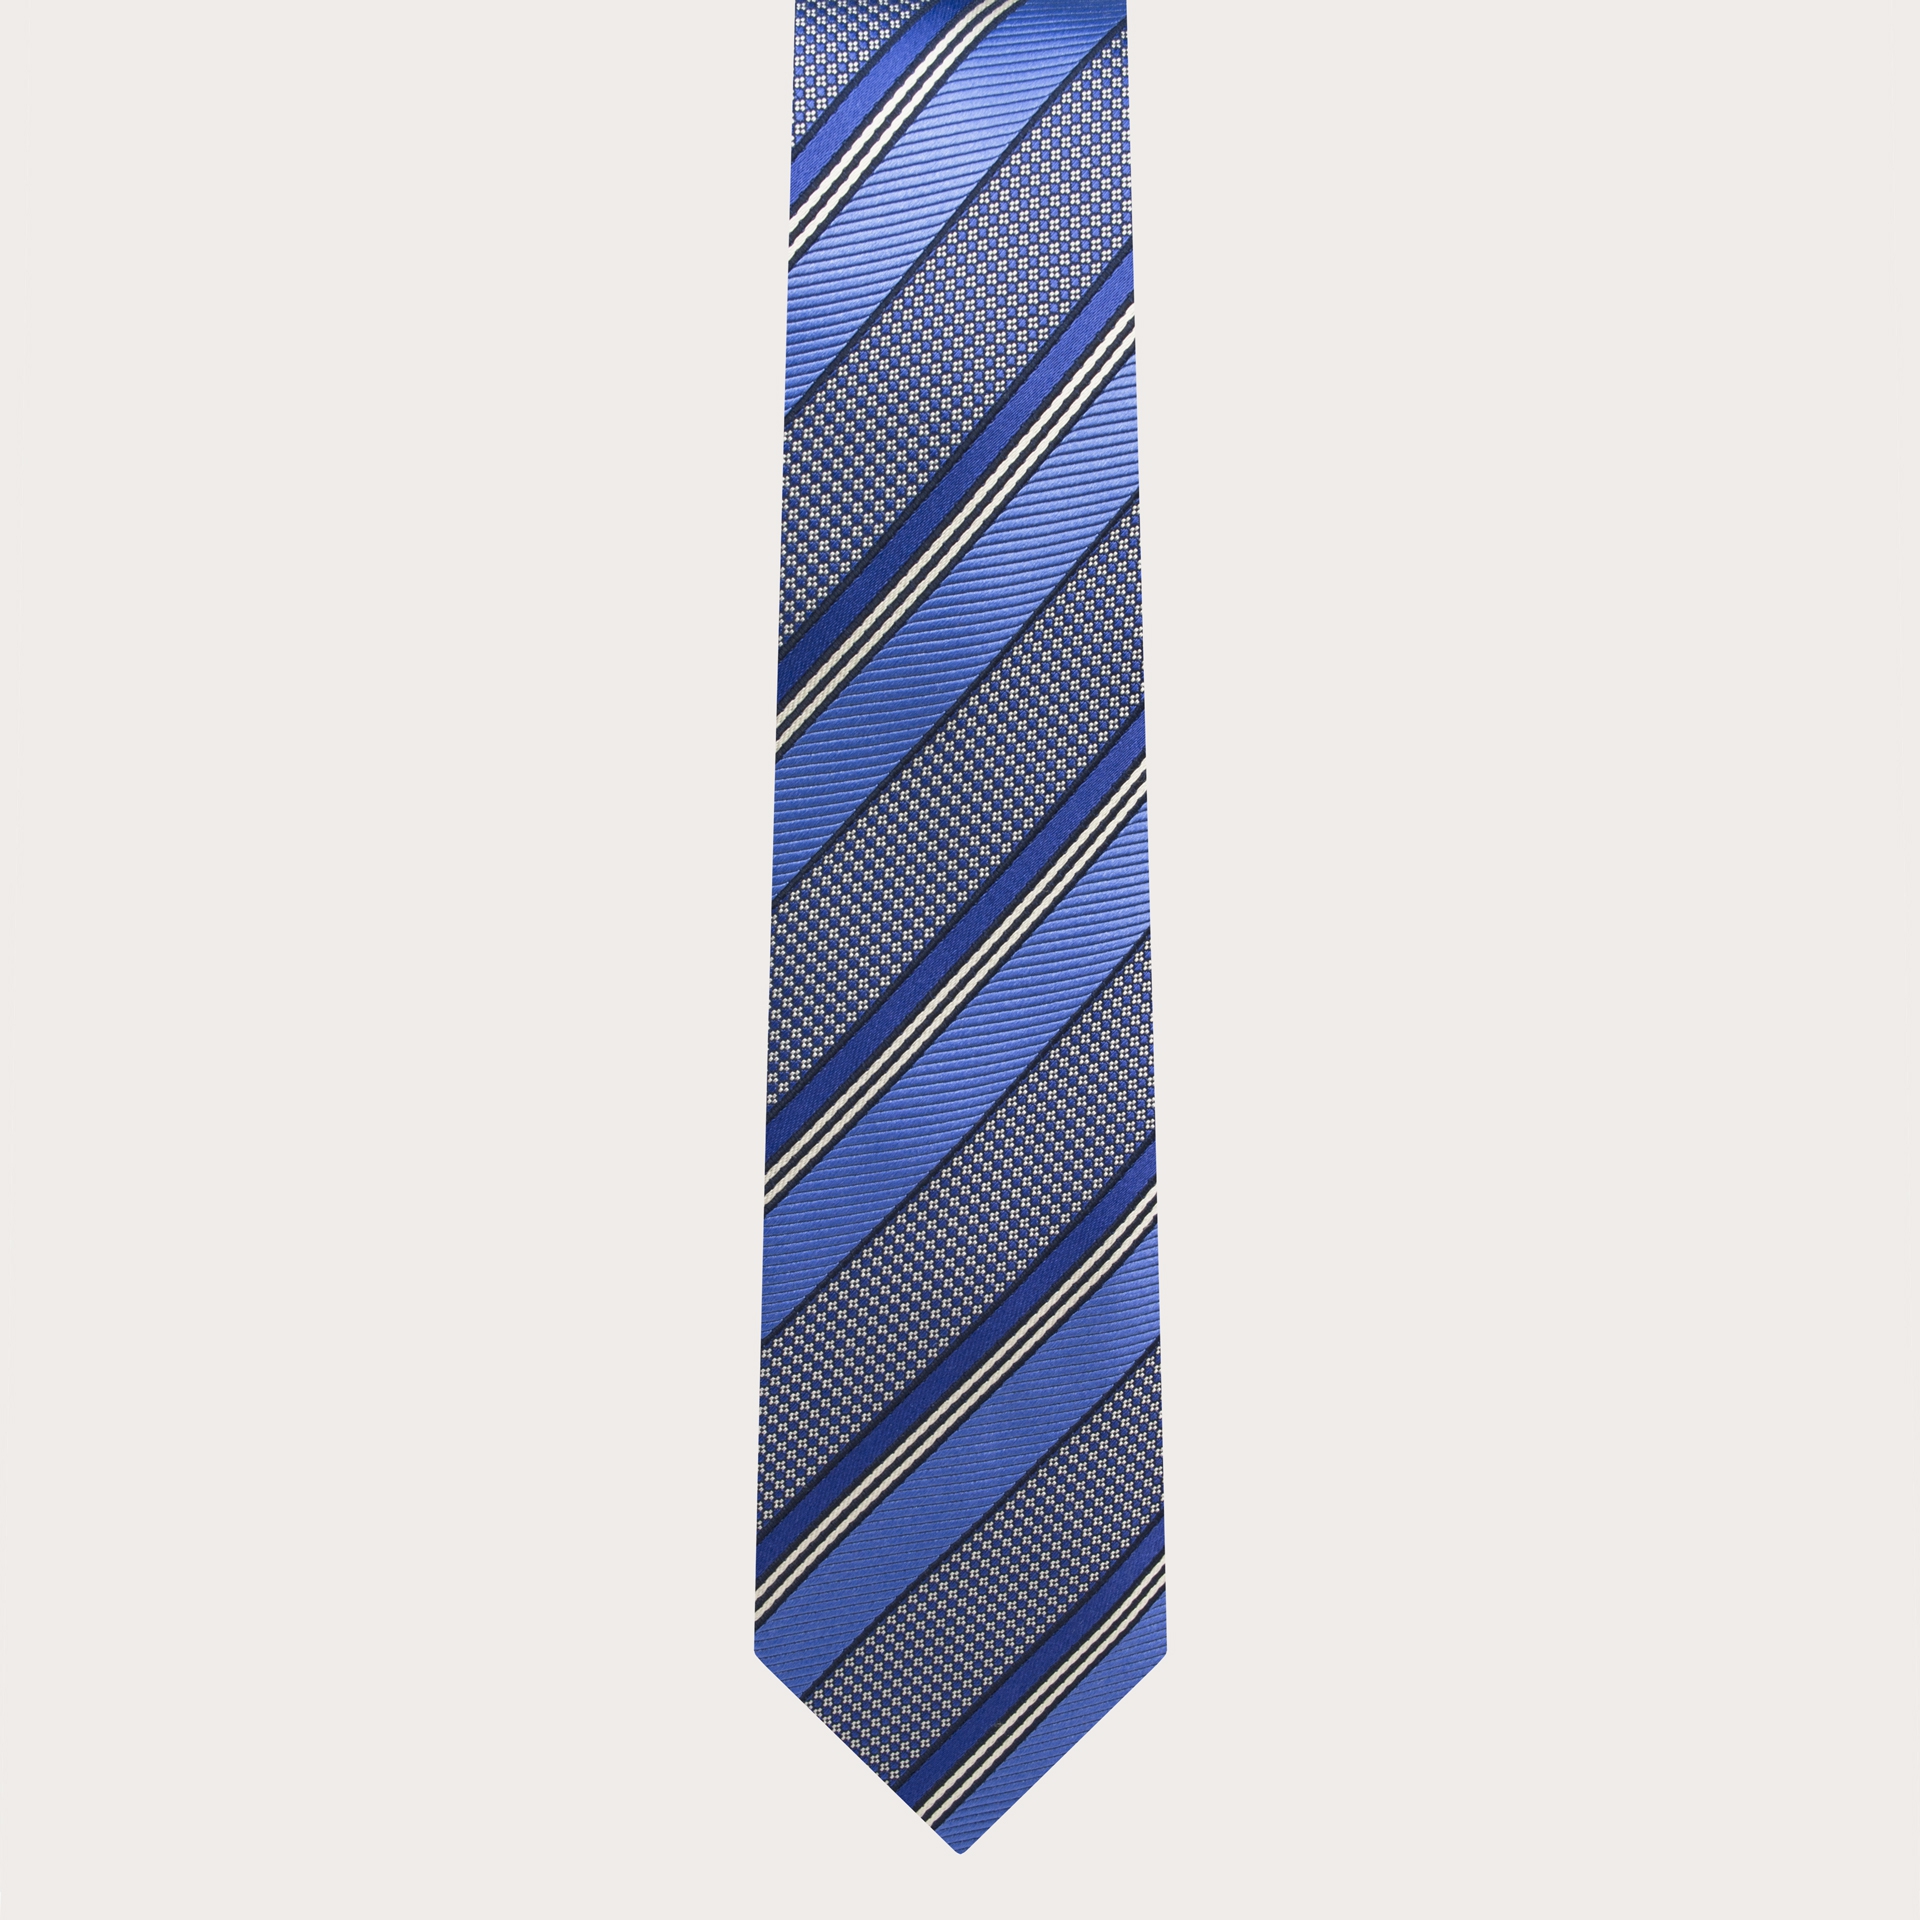 Cravatta cerimonia sottile in seta jacquard con motivo regimental blu